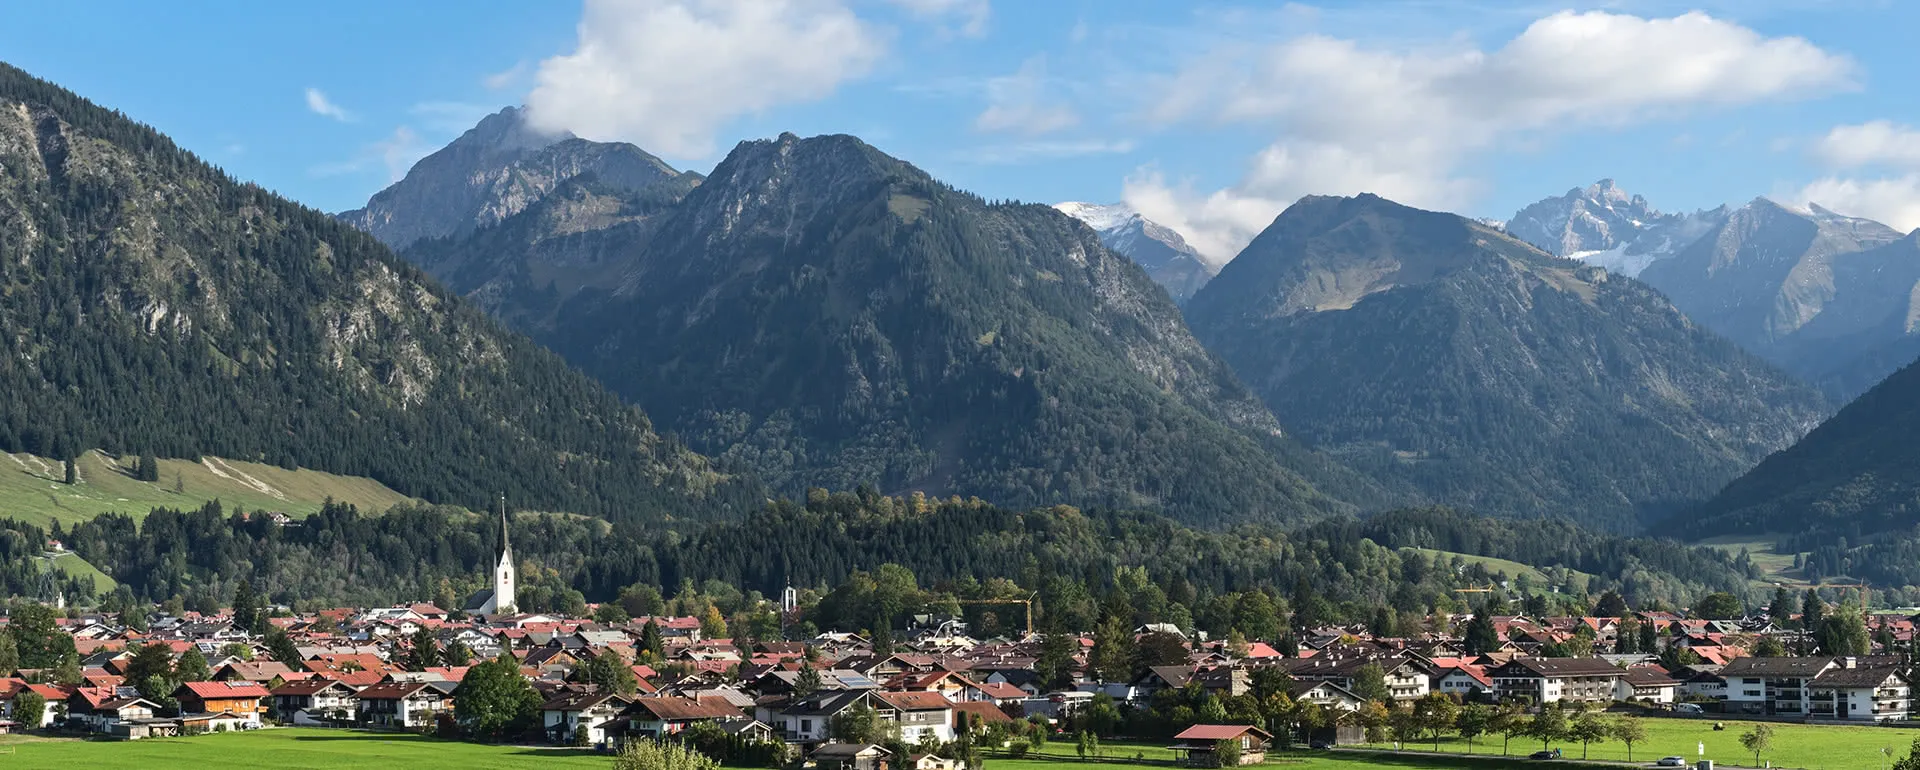 Oberstdorf panorama image